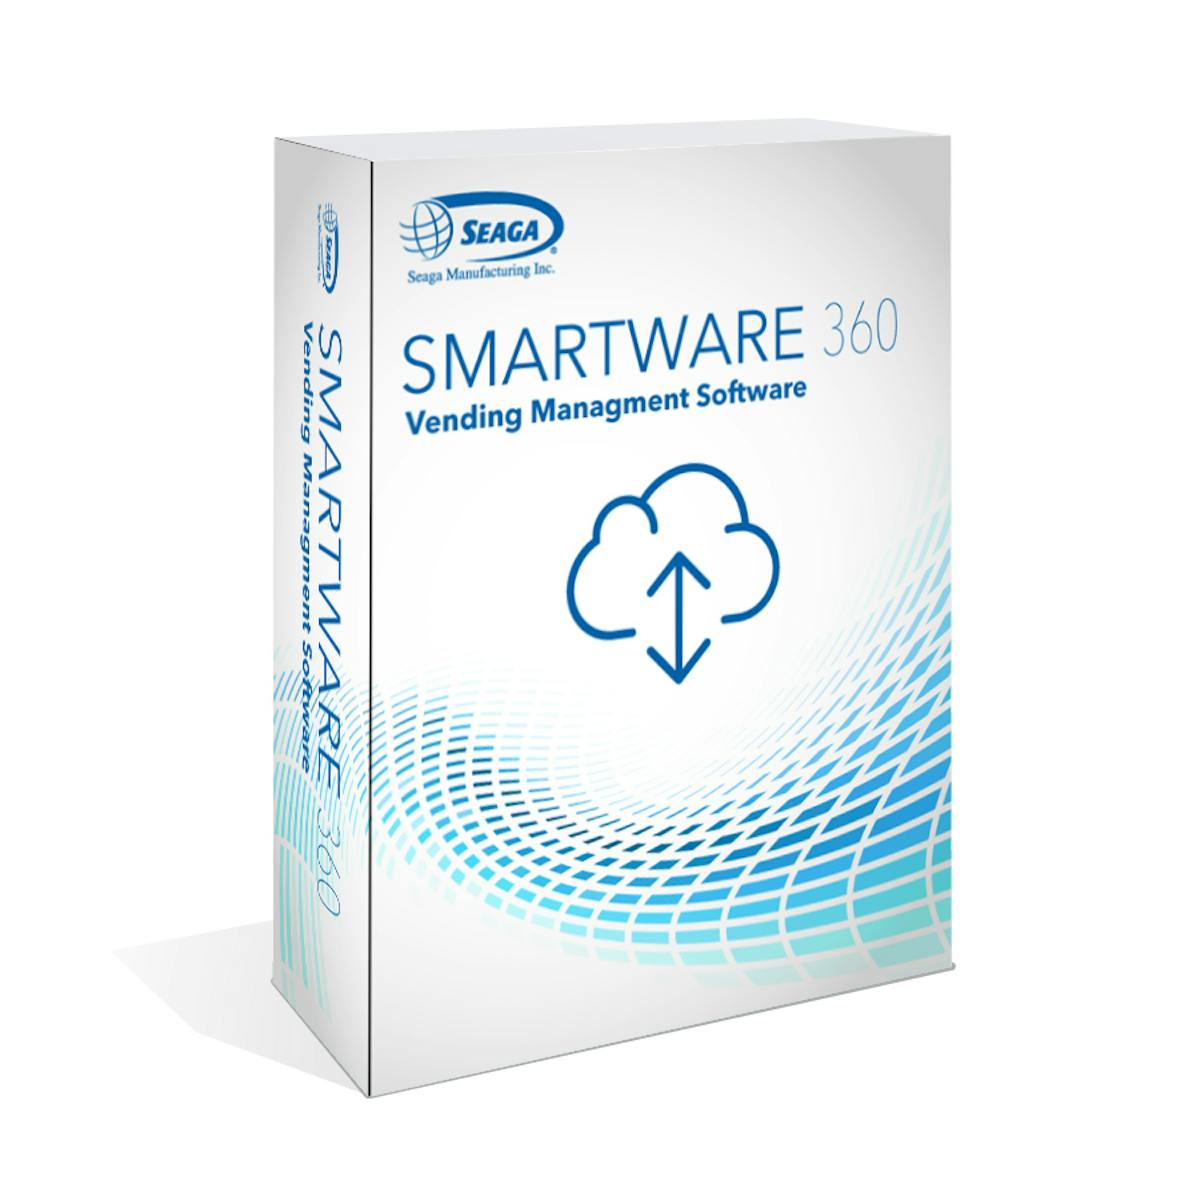 SmartWare360 vending management software